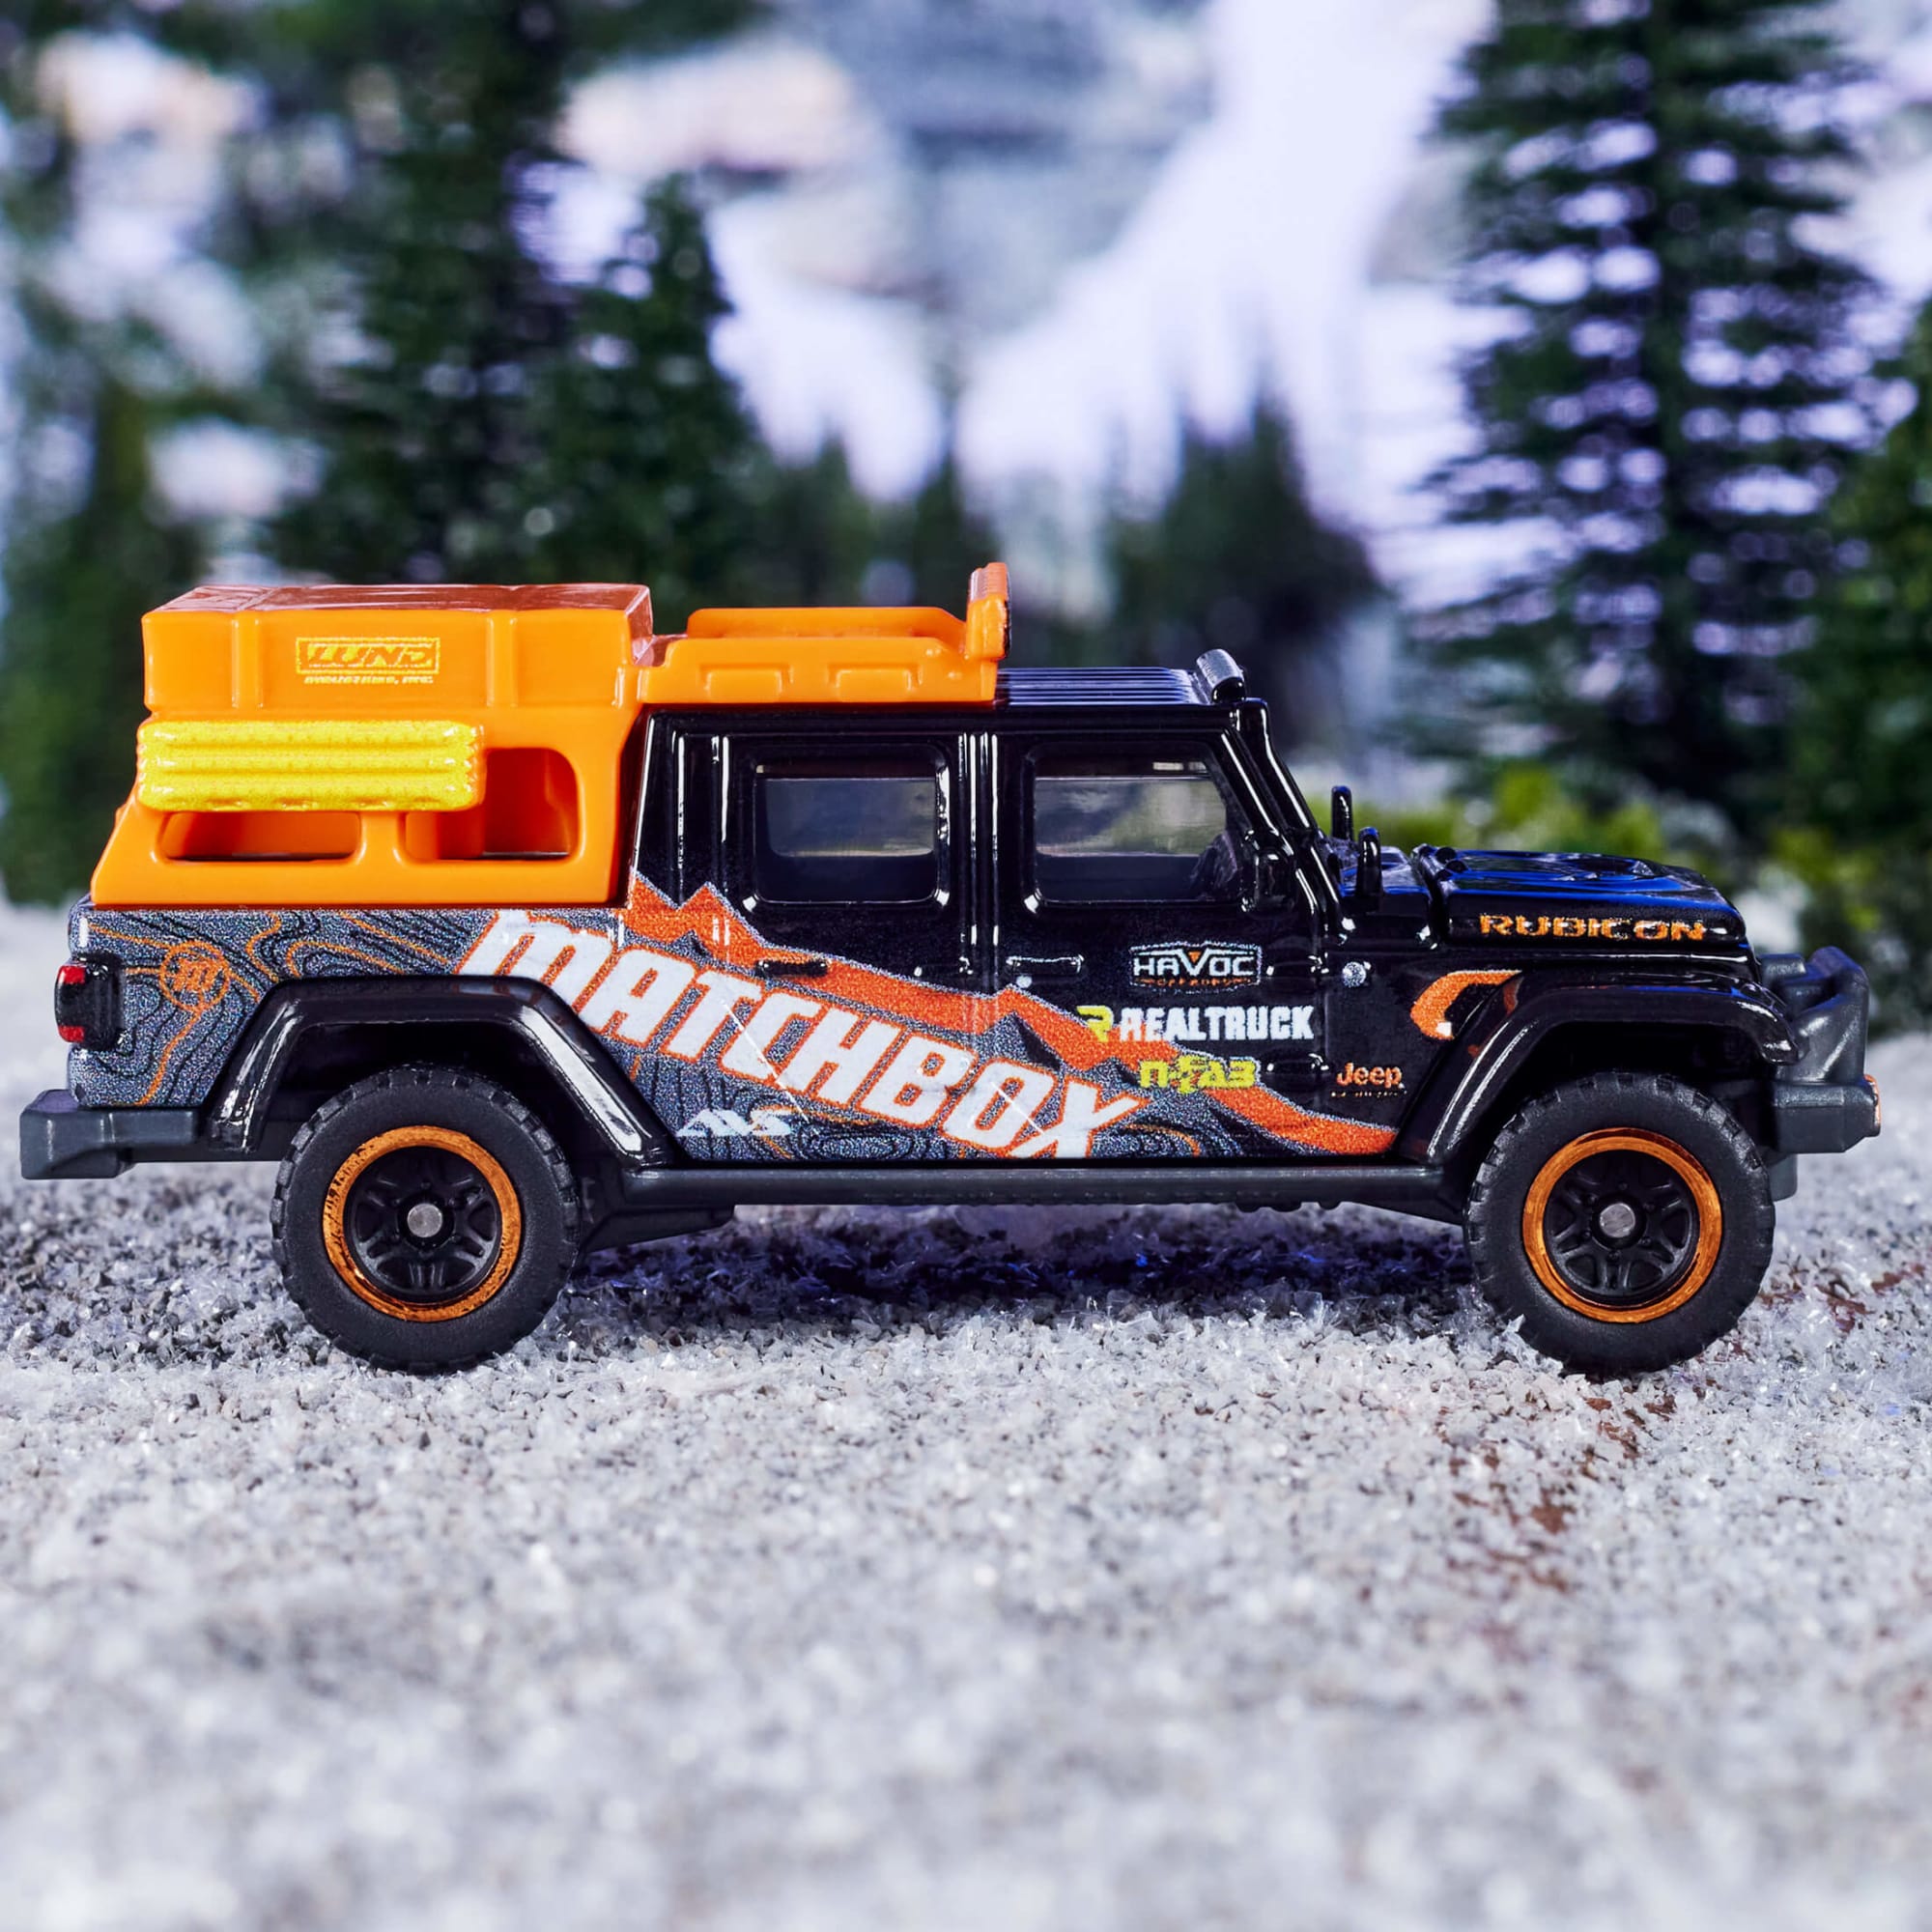 Matchbox Collectors Jeep Gladiator – Mattel Creations